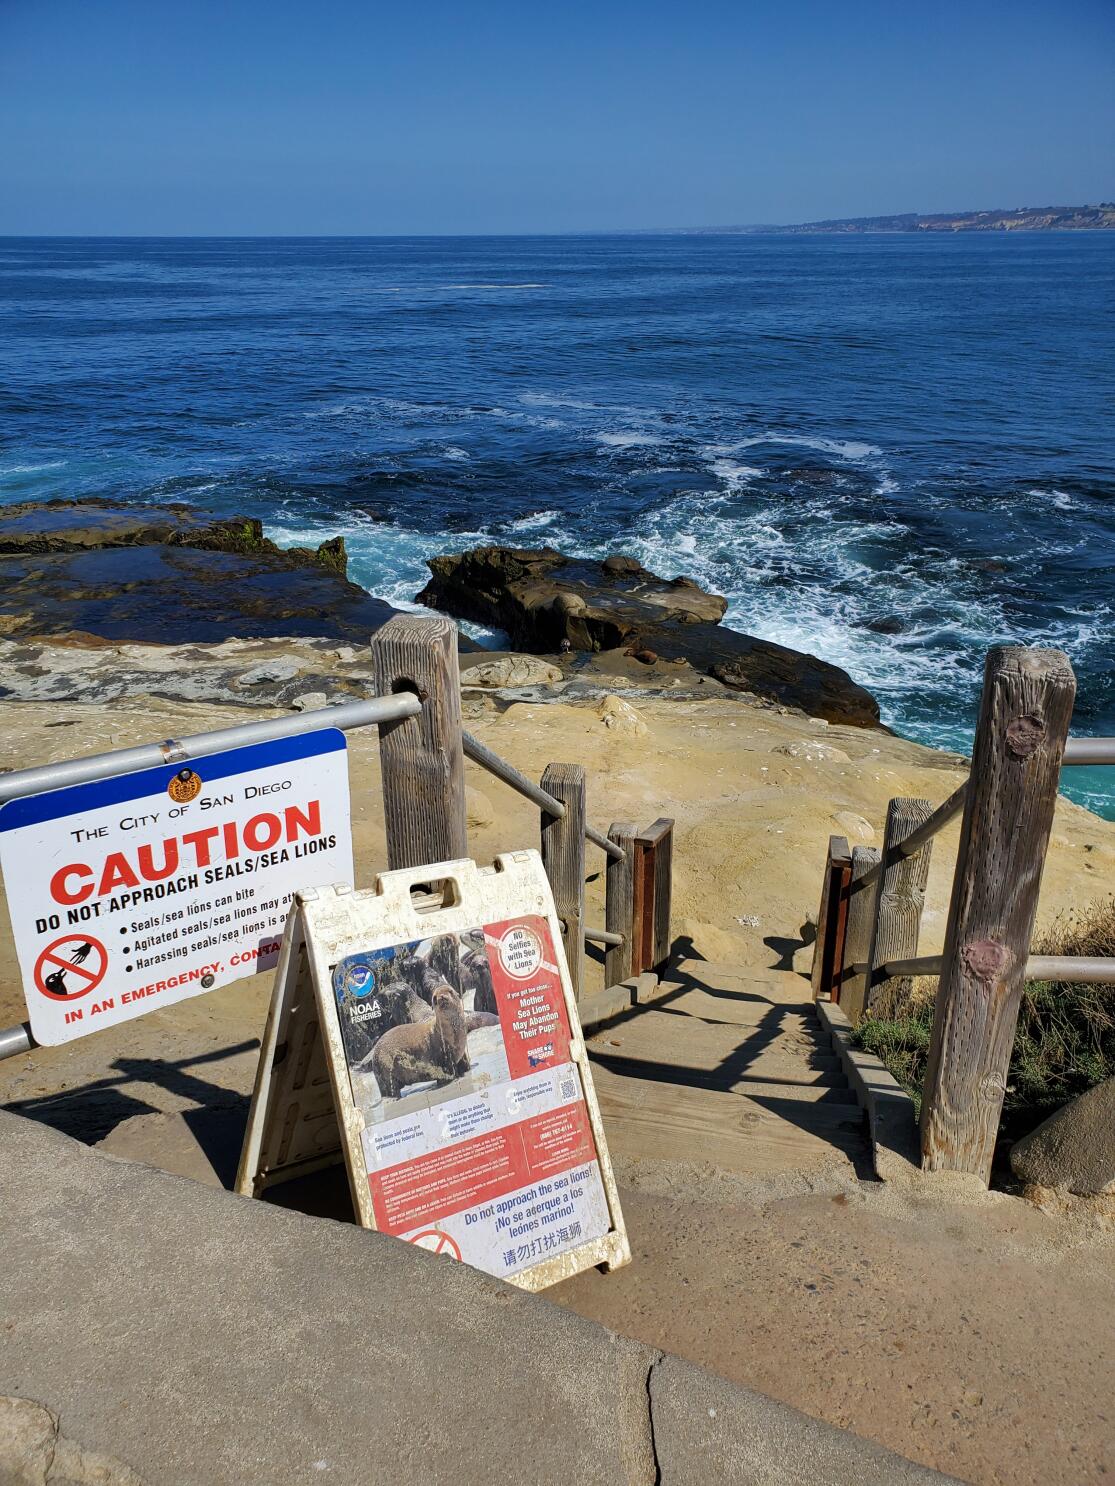 La Jolla Town Council coastal forum airs concerns about sea lions, bluffs  and Gliderport - La Jolla Light